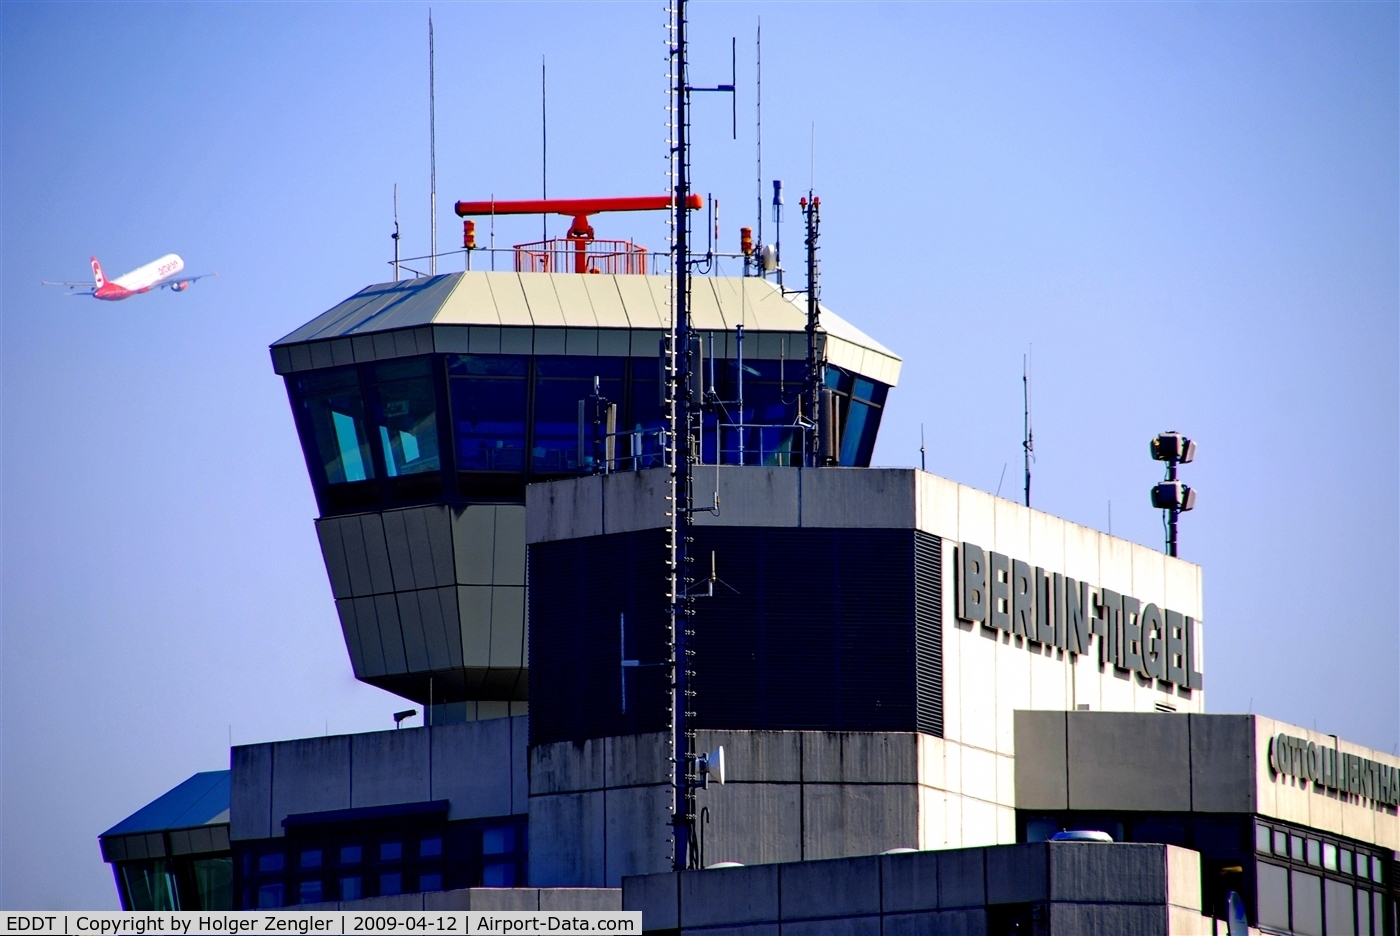 Tegel International Airport (closing in 2011), Berlin Germany (EDDT) - Tegel tower in beautiful sunlight....